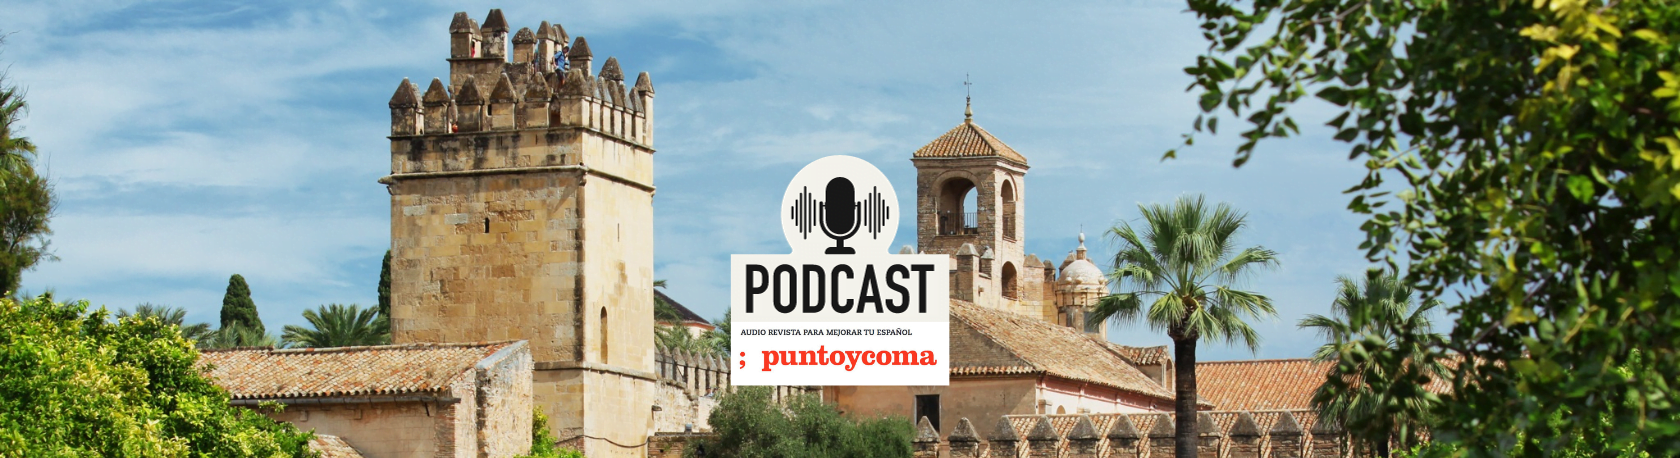 Develop your Spanish listening skills: Cordoba and its cultural melting pot heritage - Spanish Podcast - Spanish Listening Podcast - Córdoba, Spain - Learn Spanish - Speak Spanish